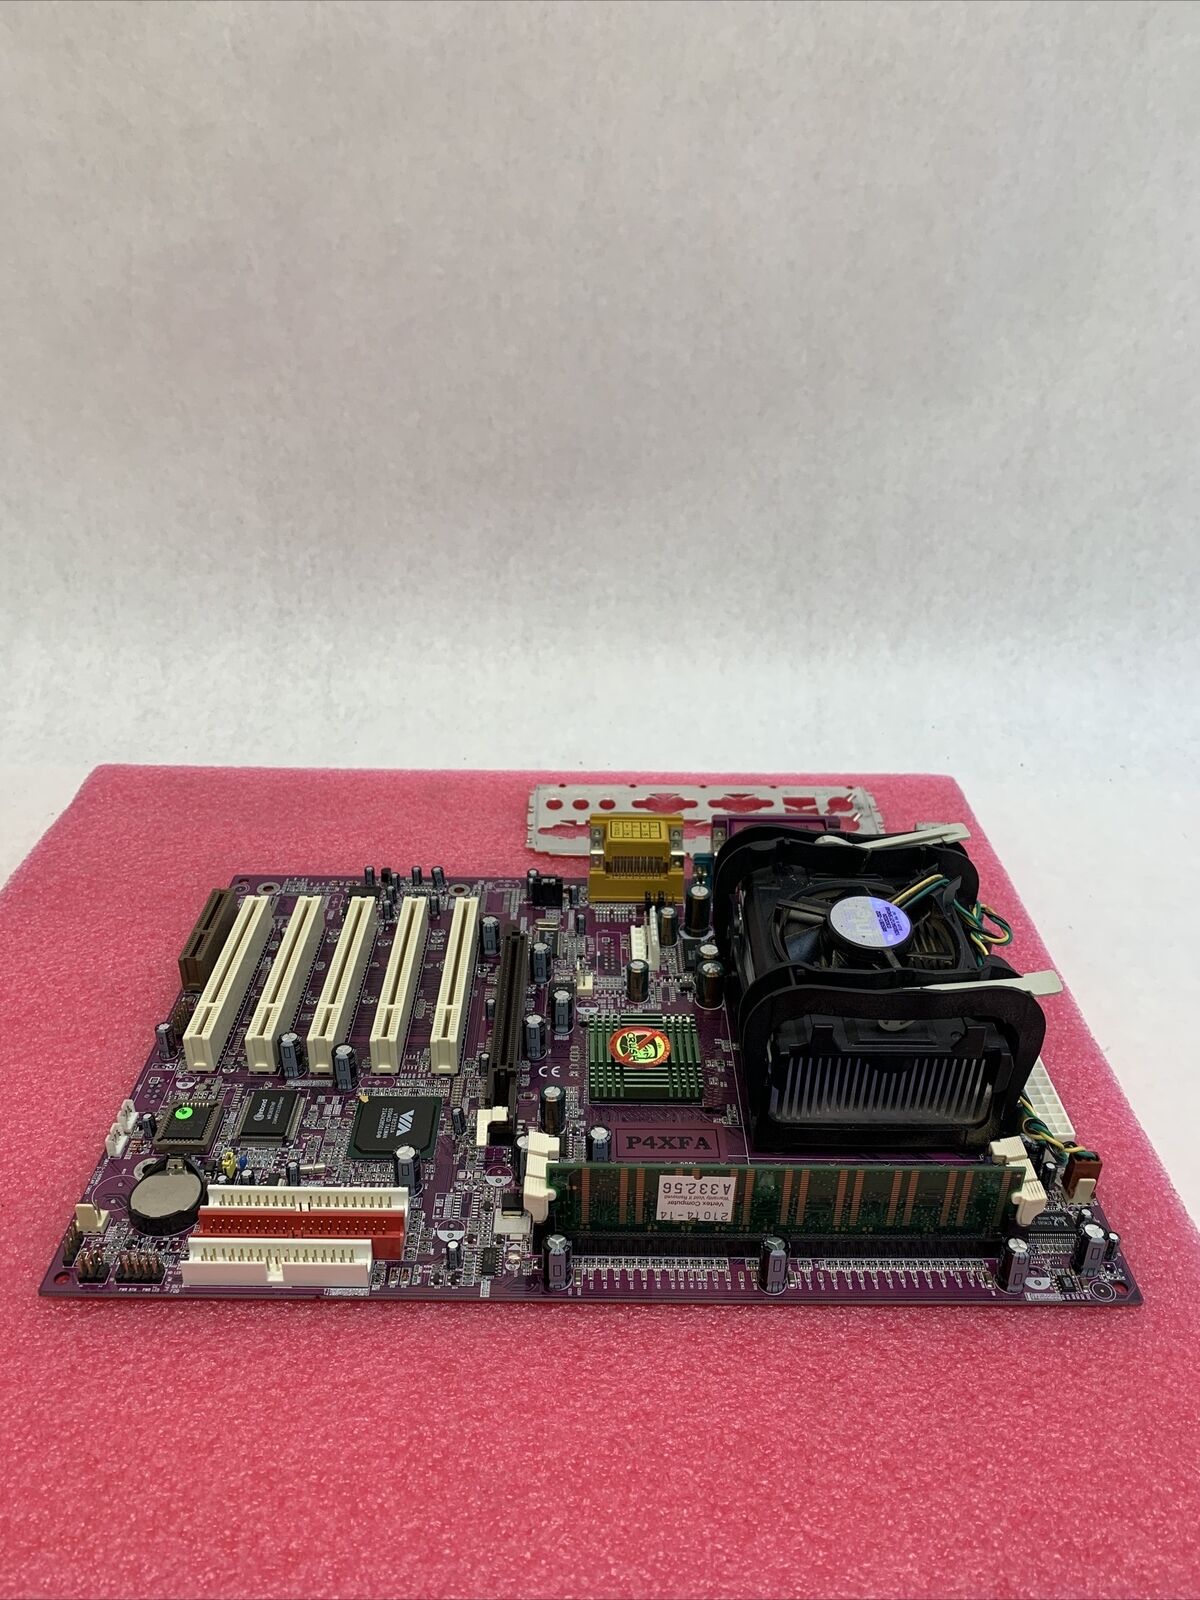 VIA P4X266-8233 Motherboard Intel Pentium 4 1.8GHz 256MB RAM W/Shield